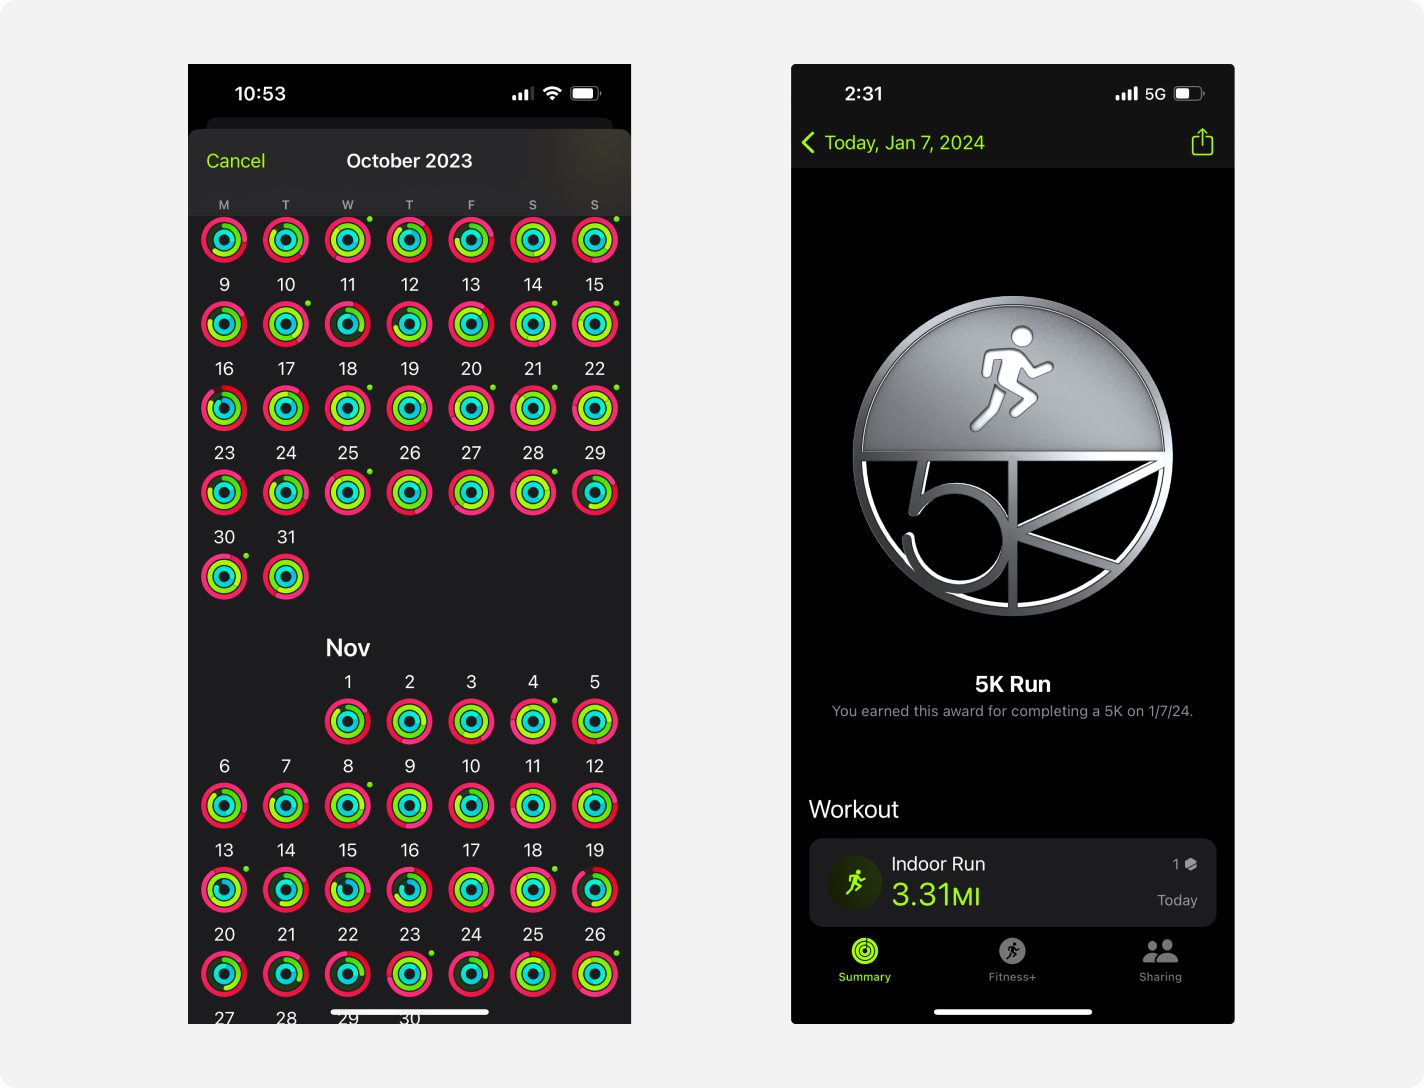 Screenshots of the Apple Watch Fitness app showing a calendar of progress rings, and a "5K Run" award.